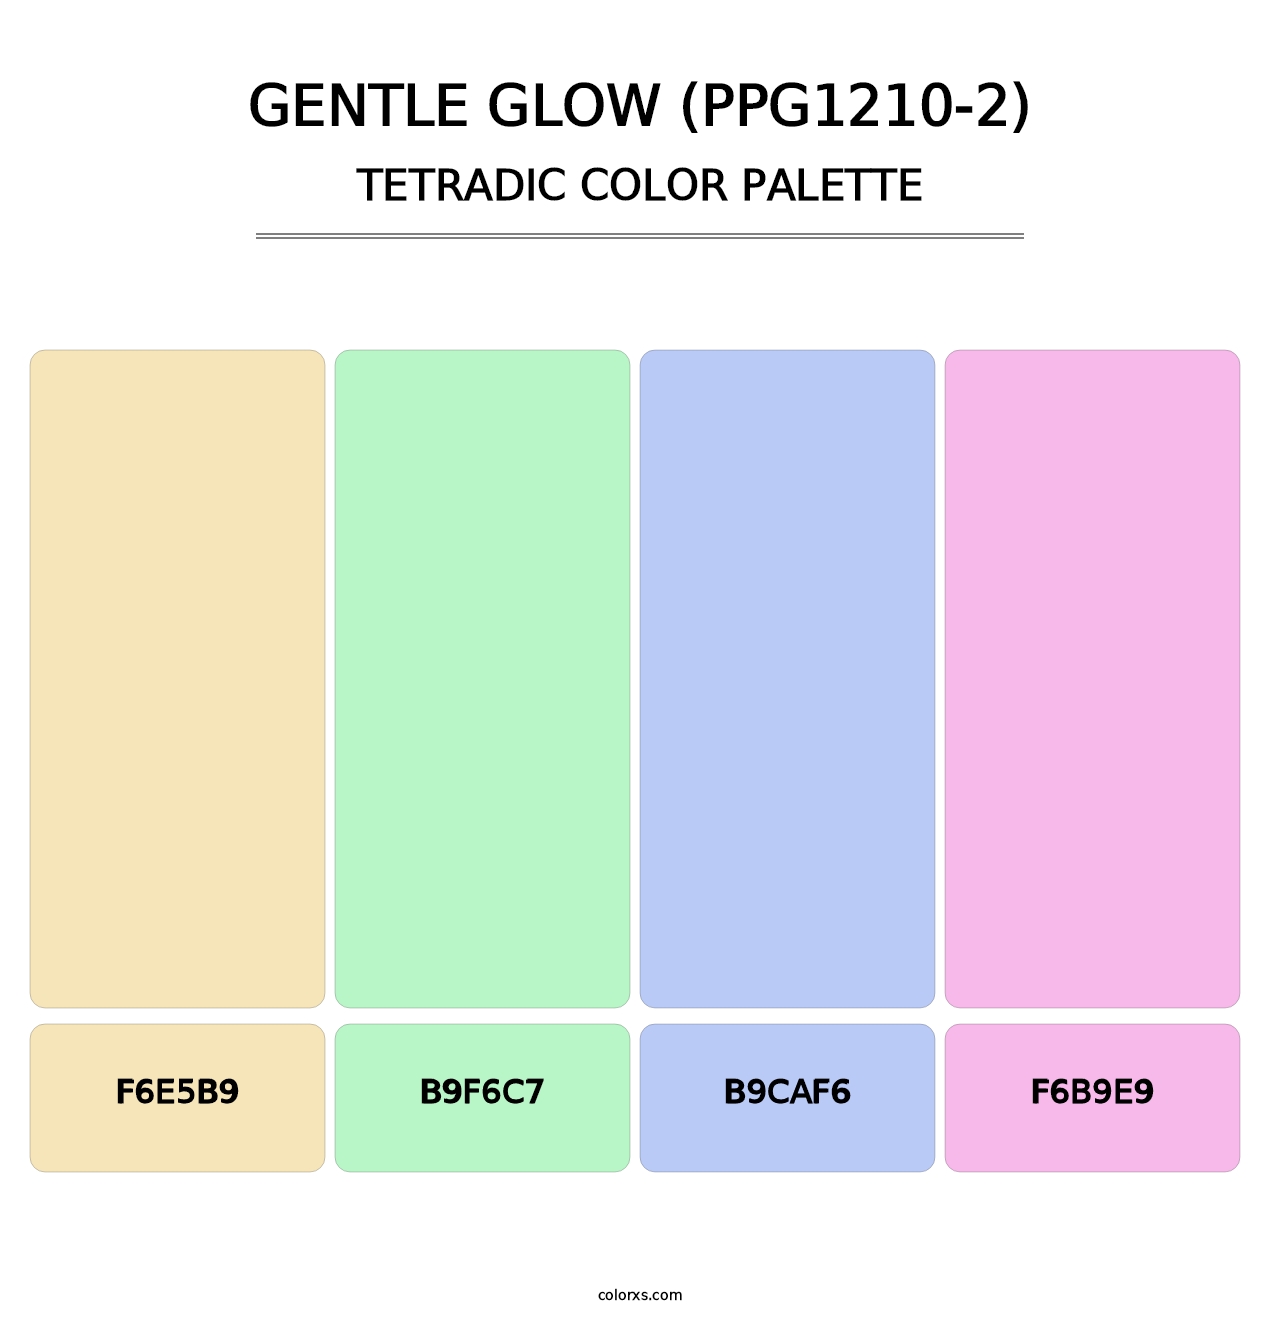 Gentle Glow (PPG1210-2) - Tetradic Color Palette